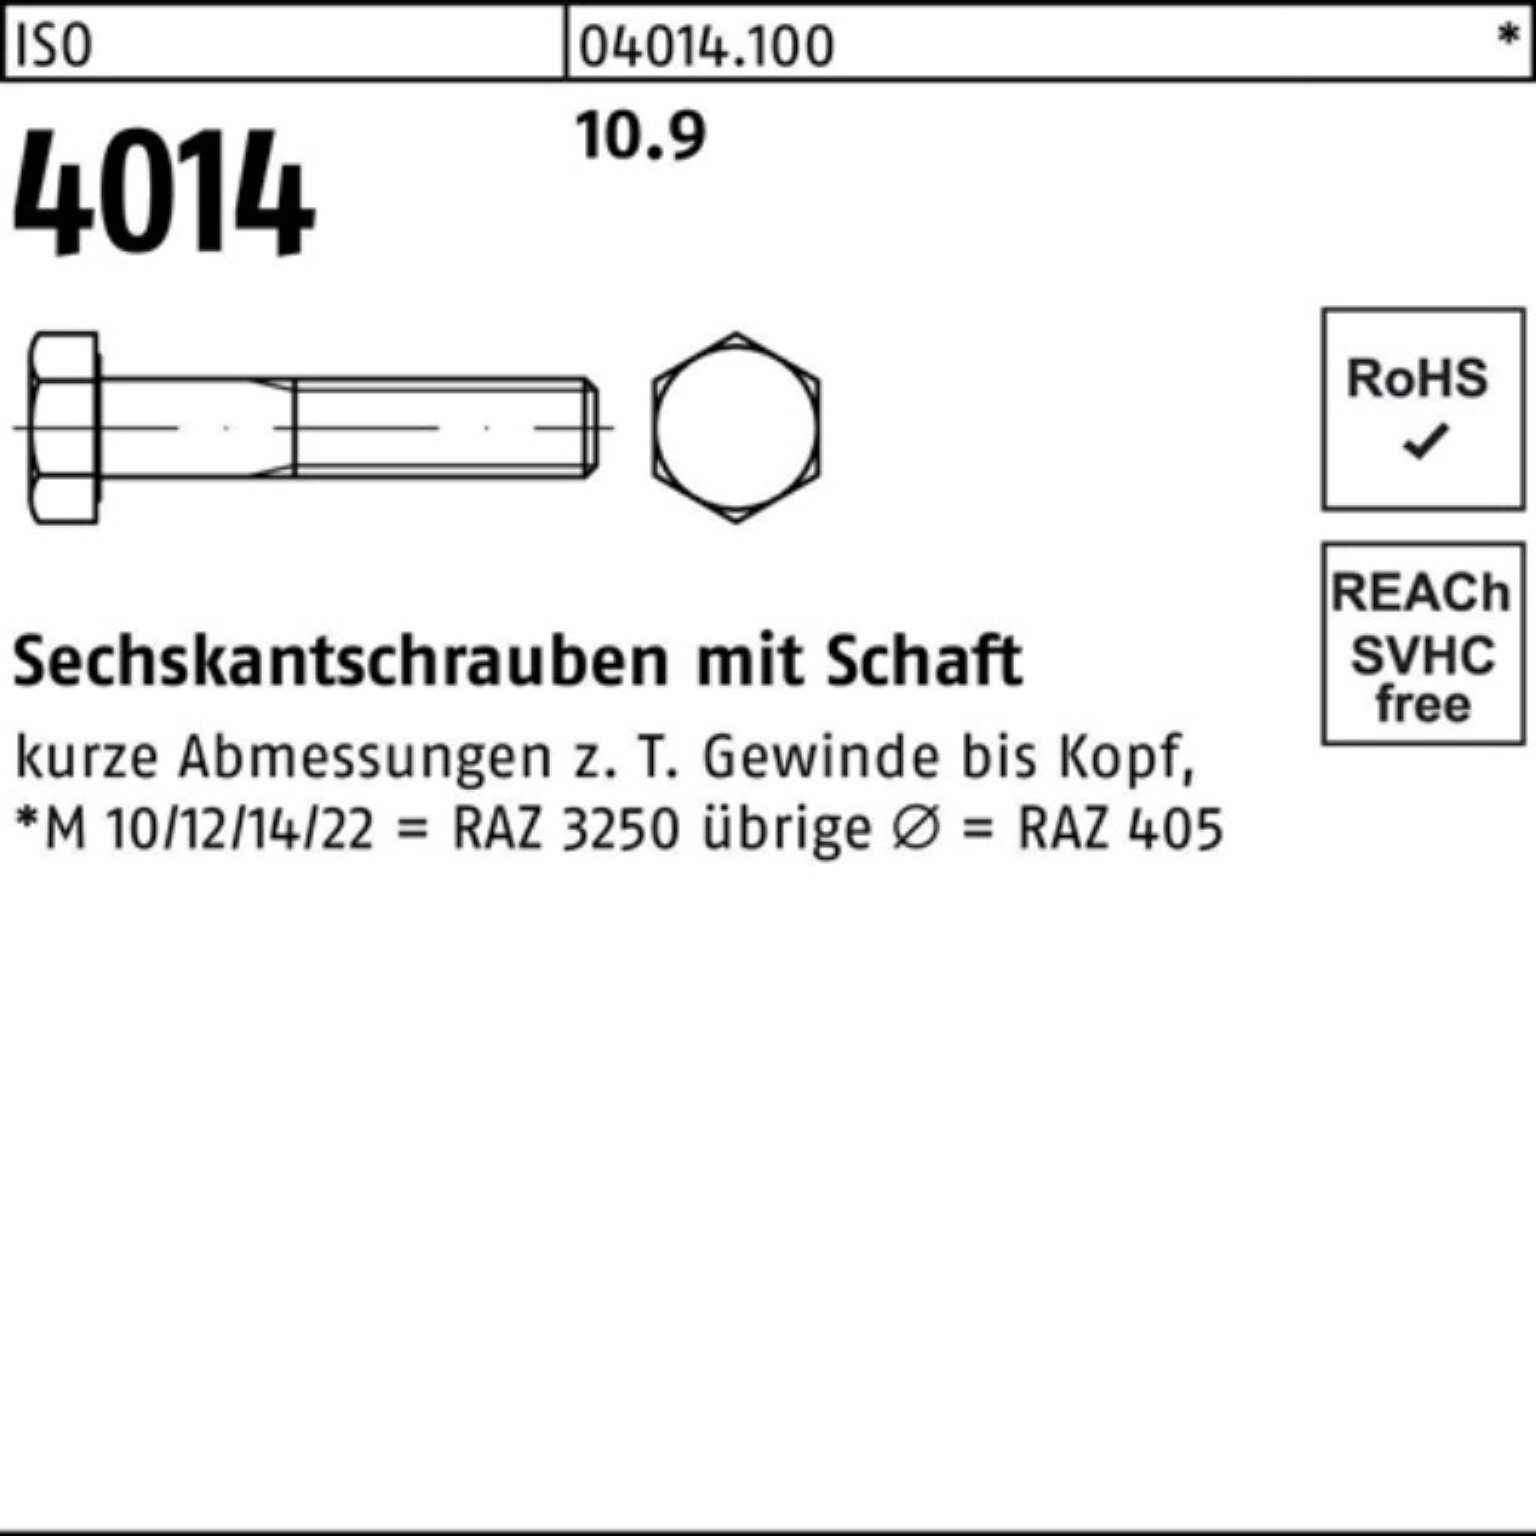 [Neu eingeführt] Bufab Sechskantschraube M18x 70 Sechskantschraube Pack 100er Stück 4014 IS 10.9 25 ISO Schaft